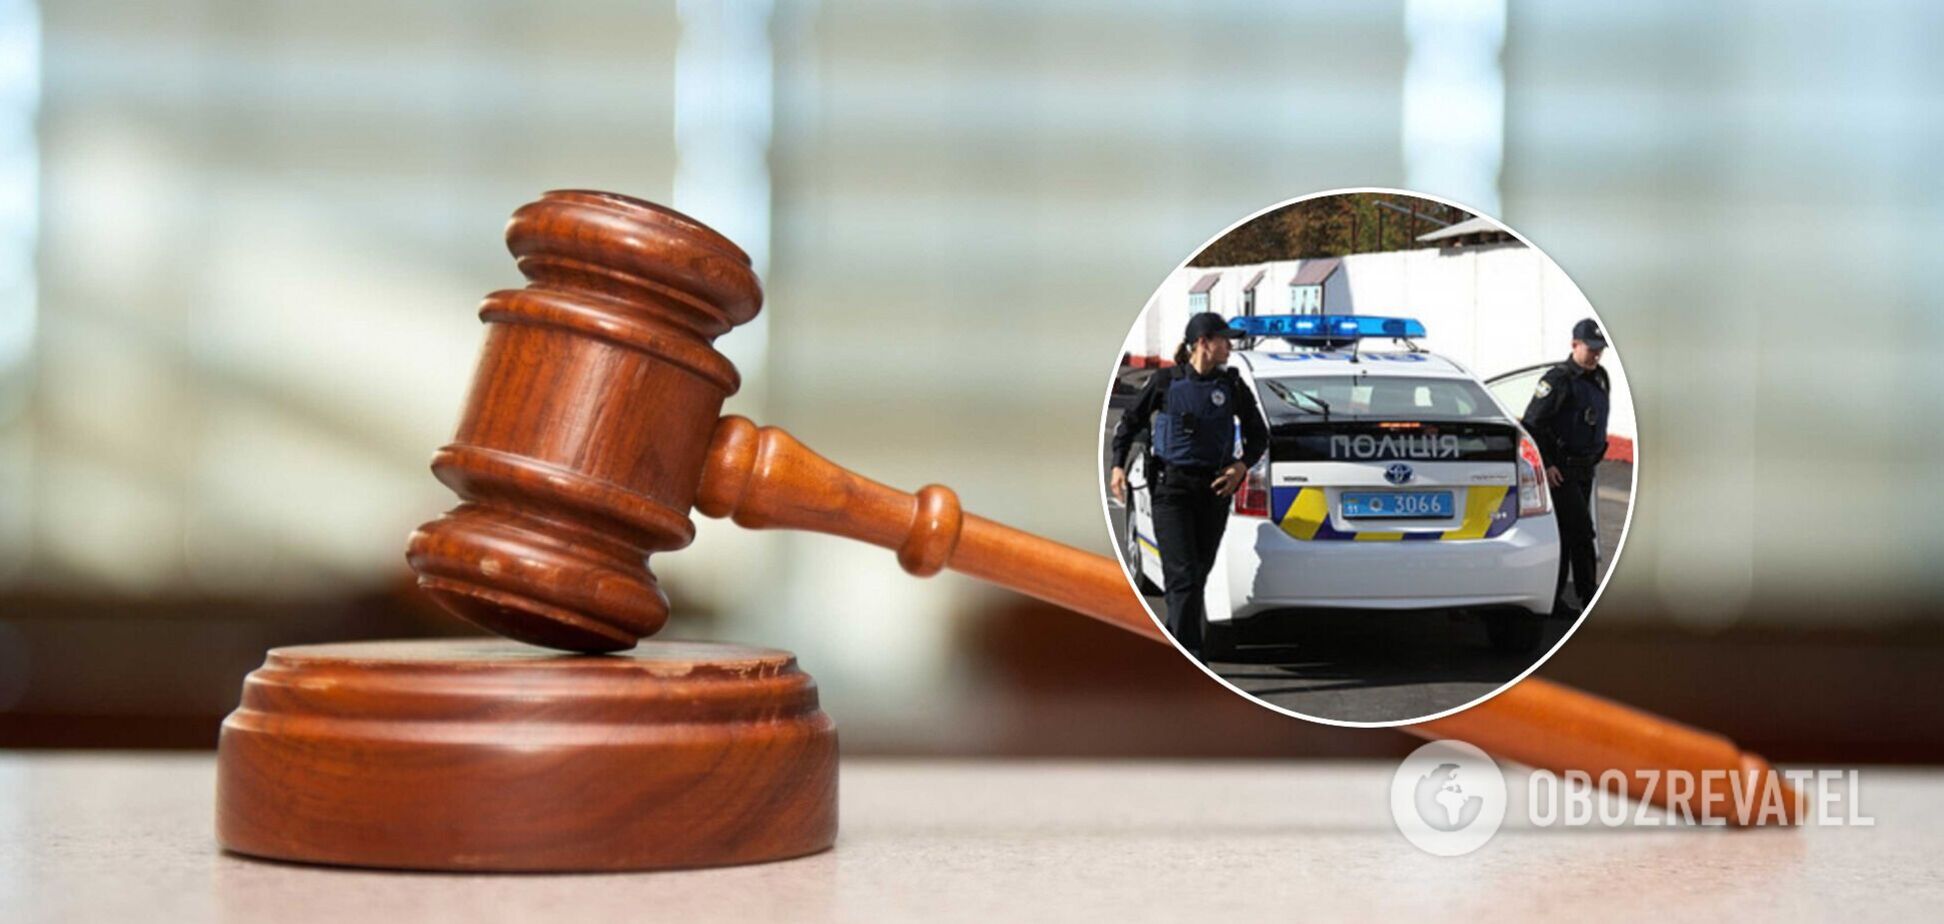 В Виннице мужчина избил двух женщин из-за отказа в 'любви': суд арестовал его